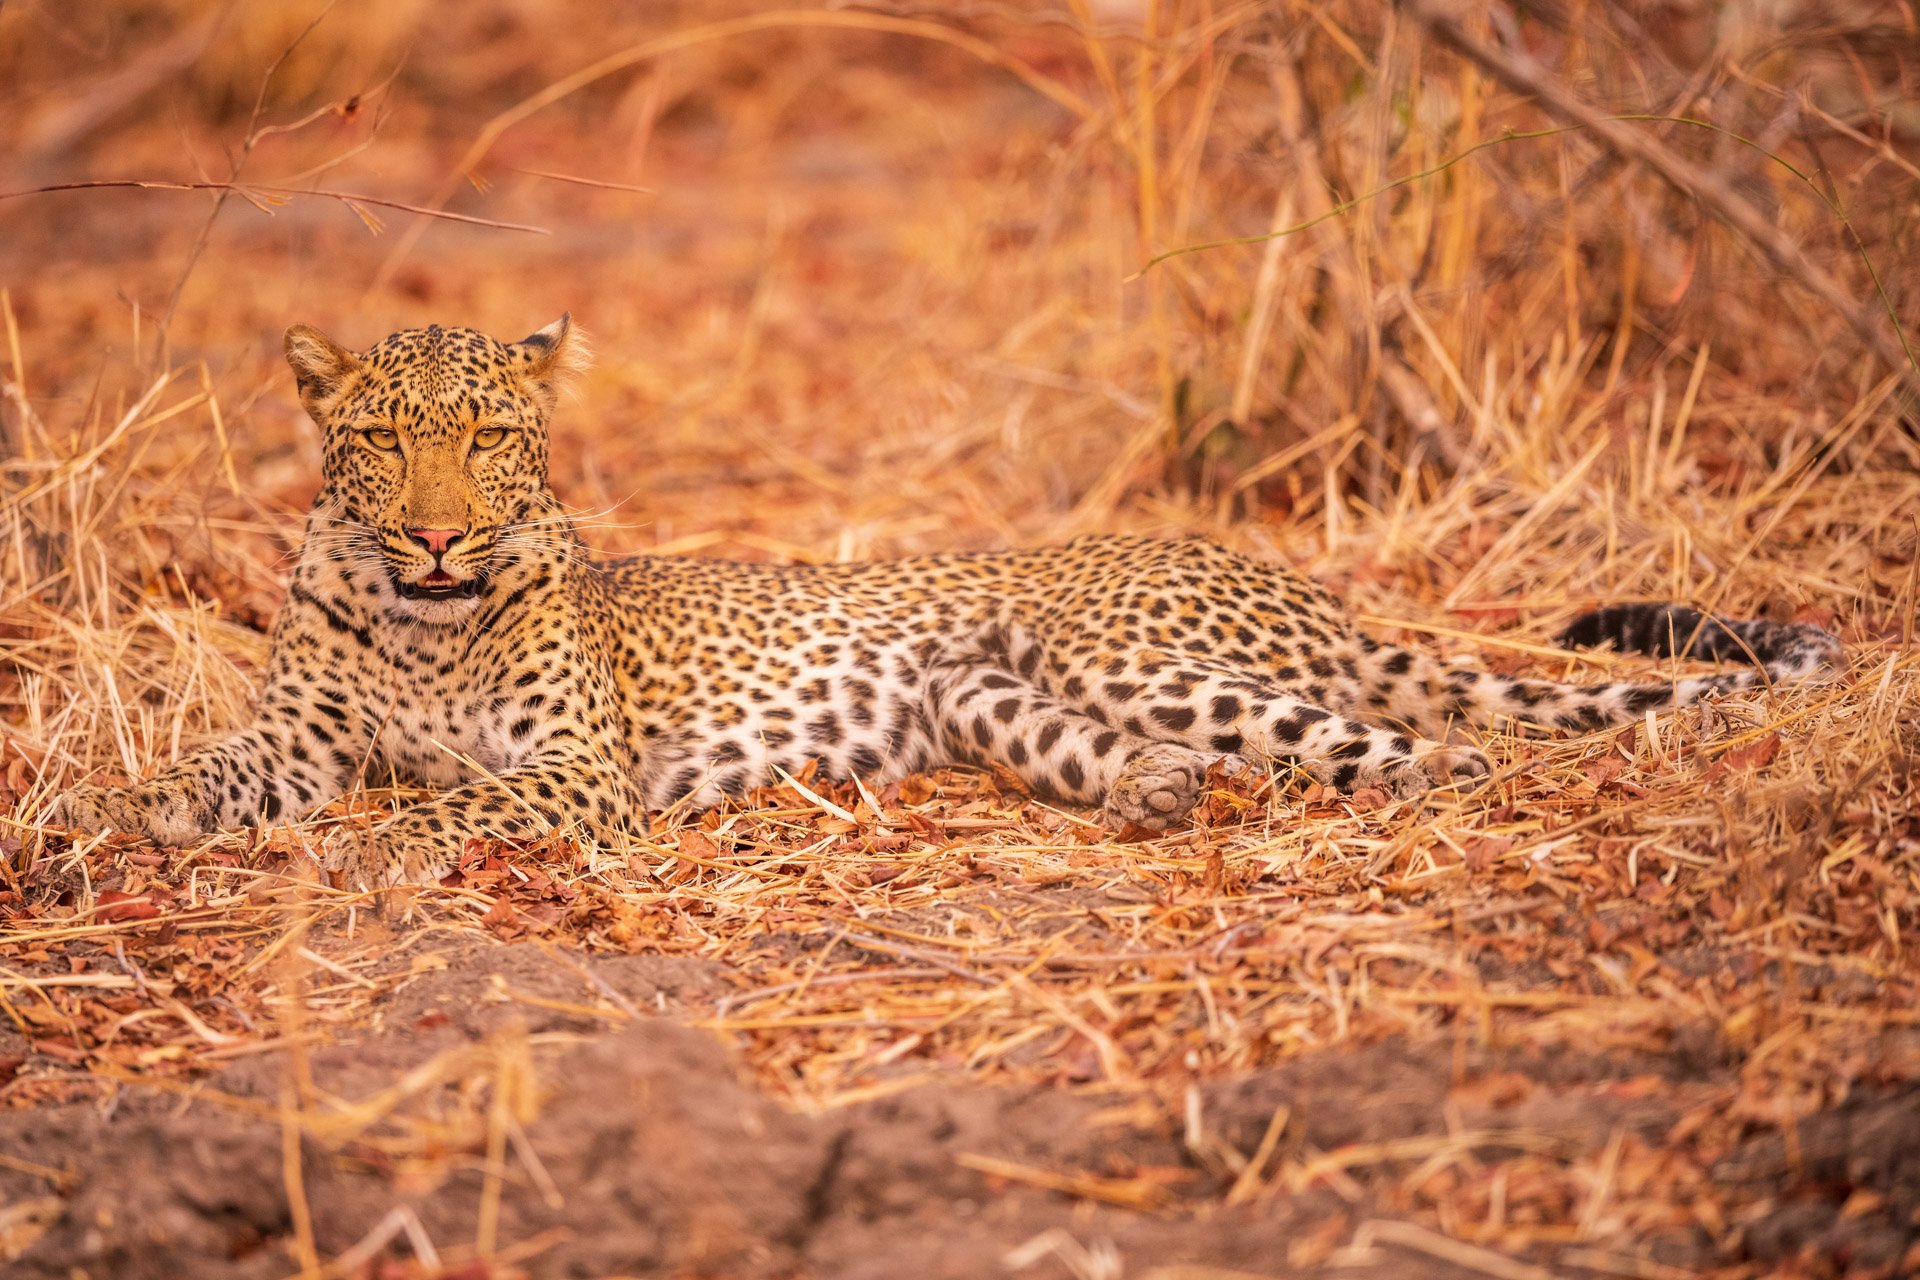 aweb2-leopard vegetation-mammals.jpg